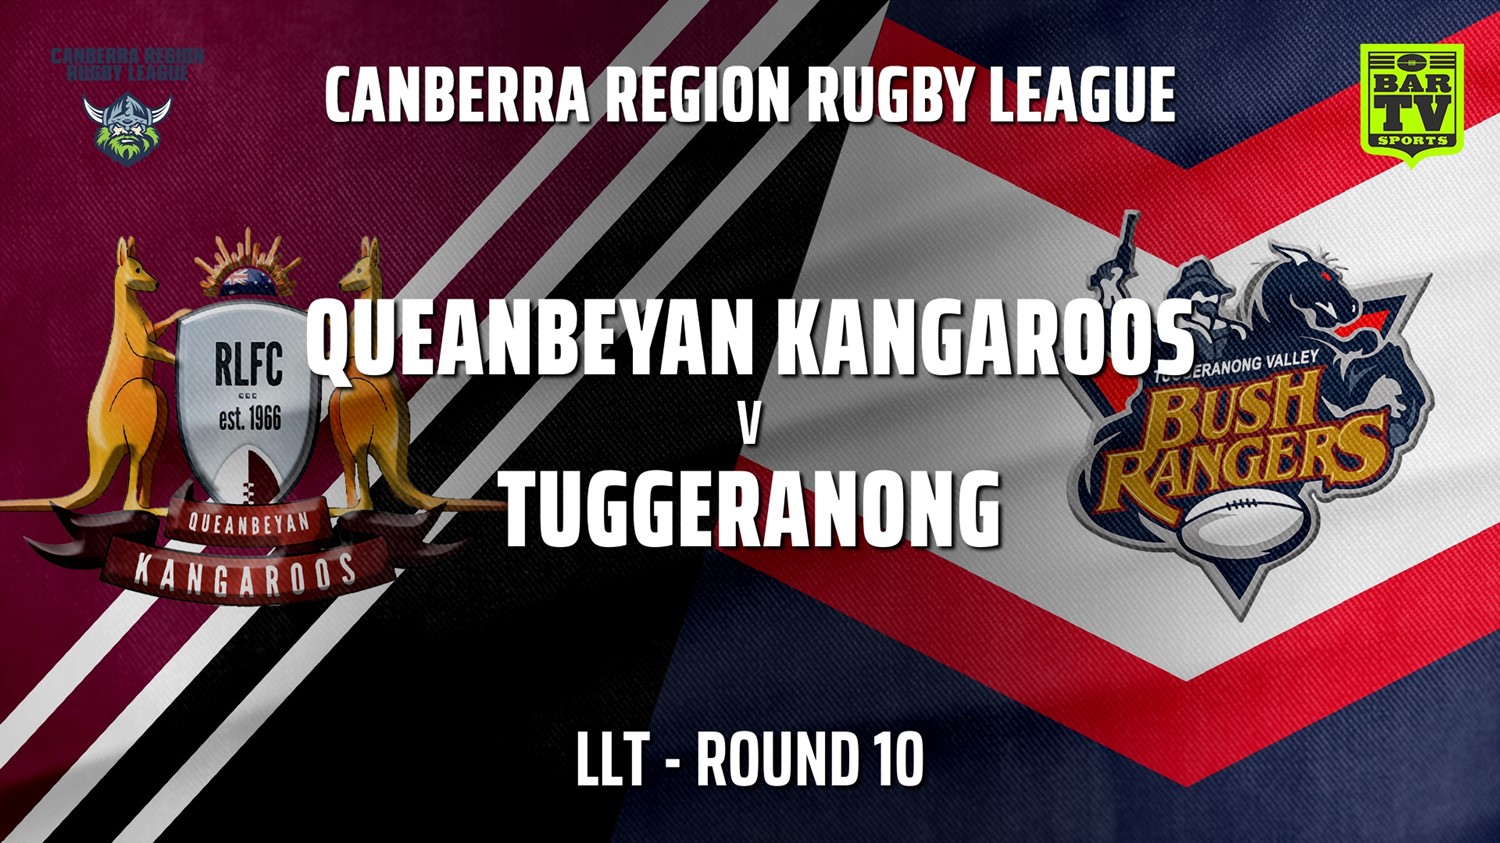 210703-Canberra Round 10 - LLT - Queanbeyan Kangaroos v Tuggeranong Bushrangers Slate Image